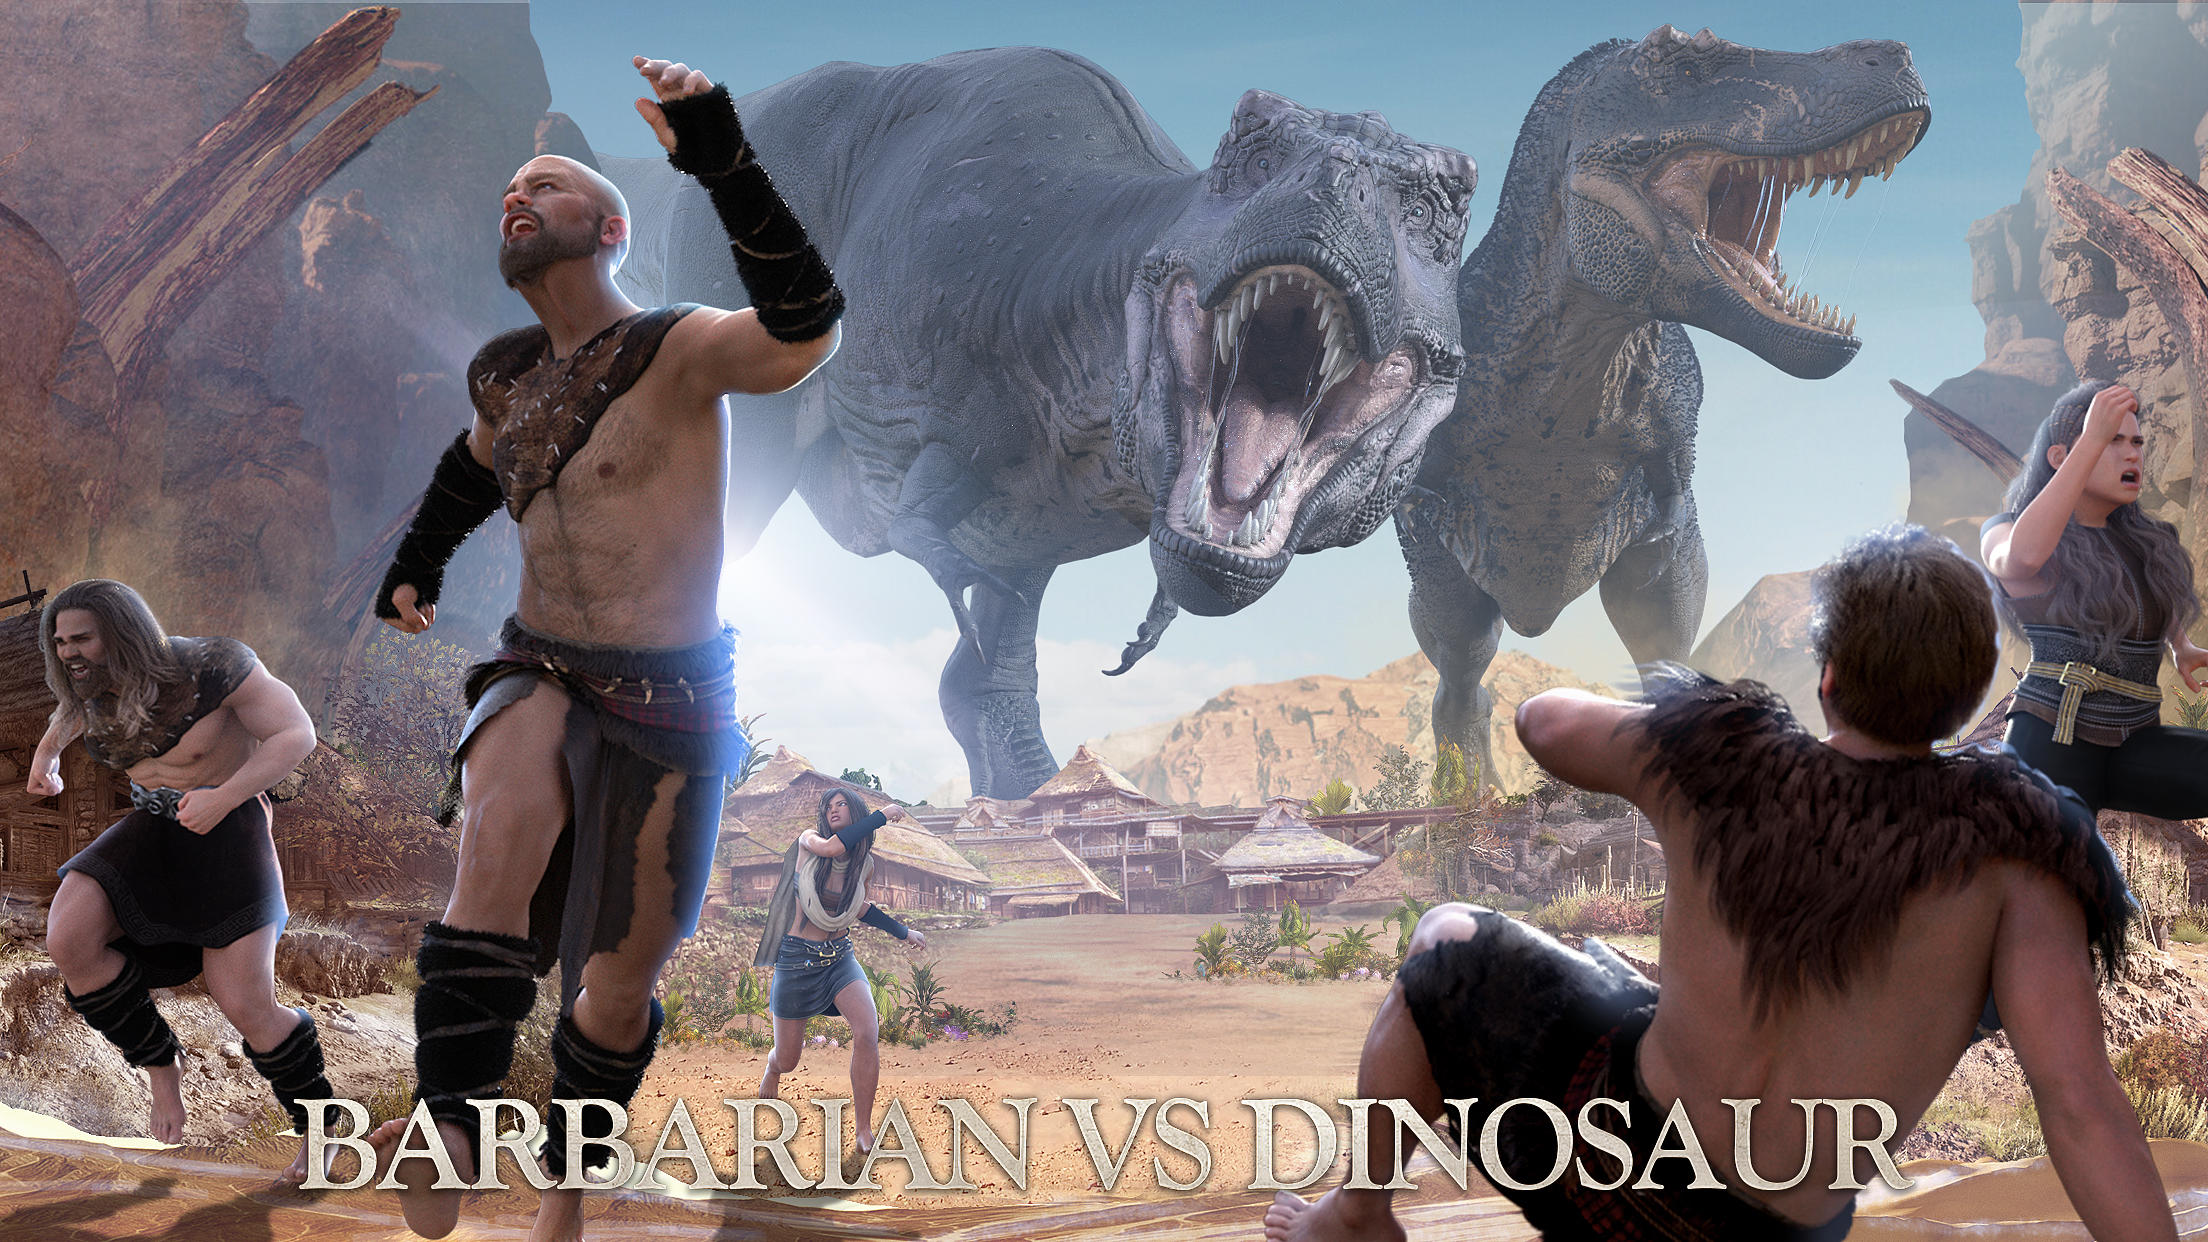 Screenshot 1 of Tribù barbarica: guerra dei dinosauri 1.18.0